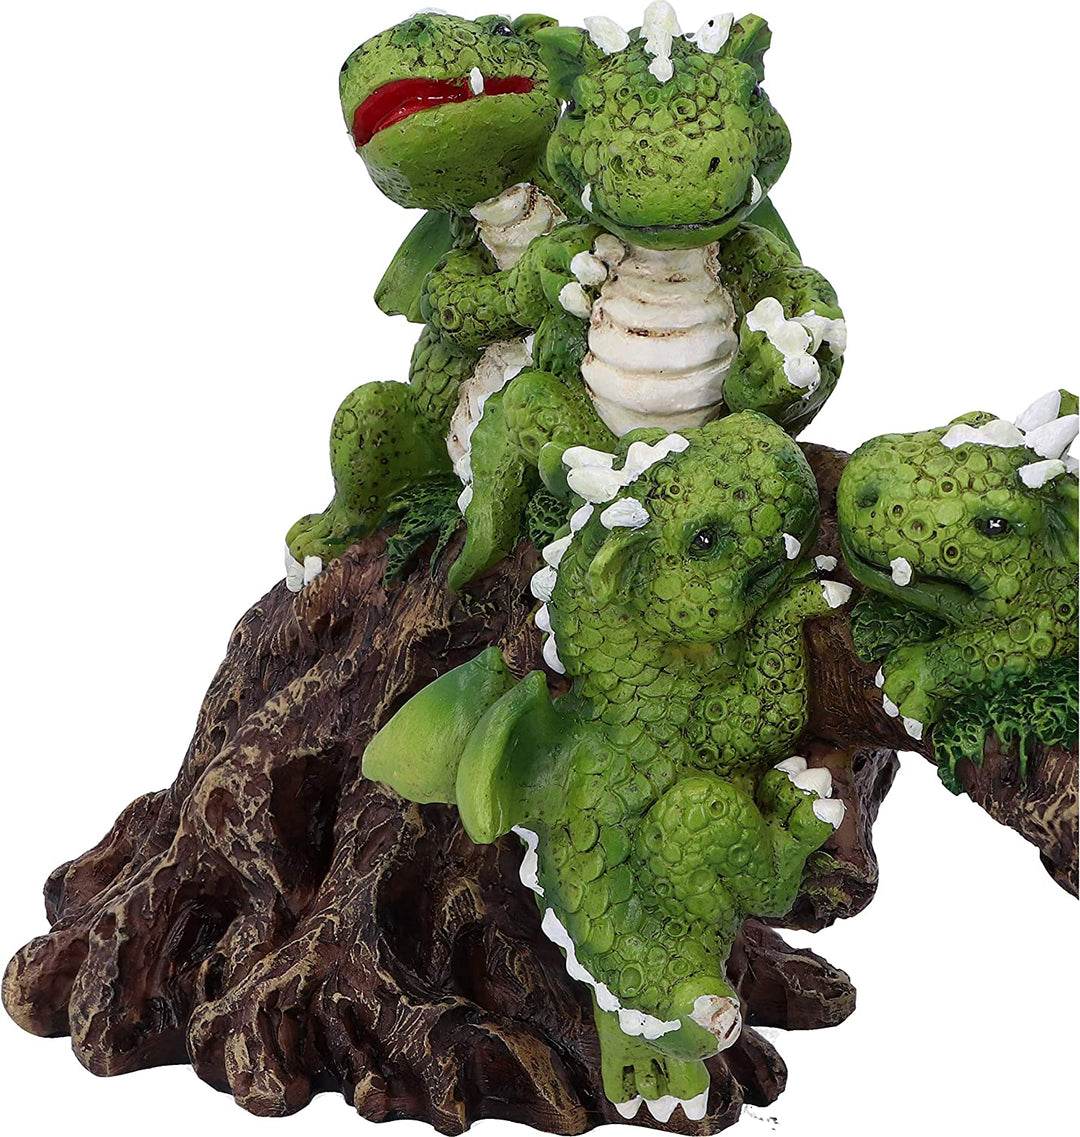 Daring Dragonlings Green Baby Dragons on Branch Figurine